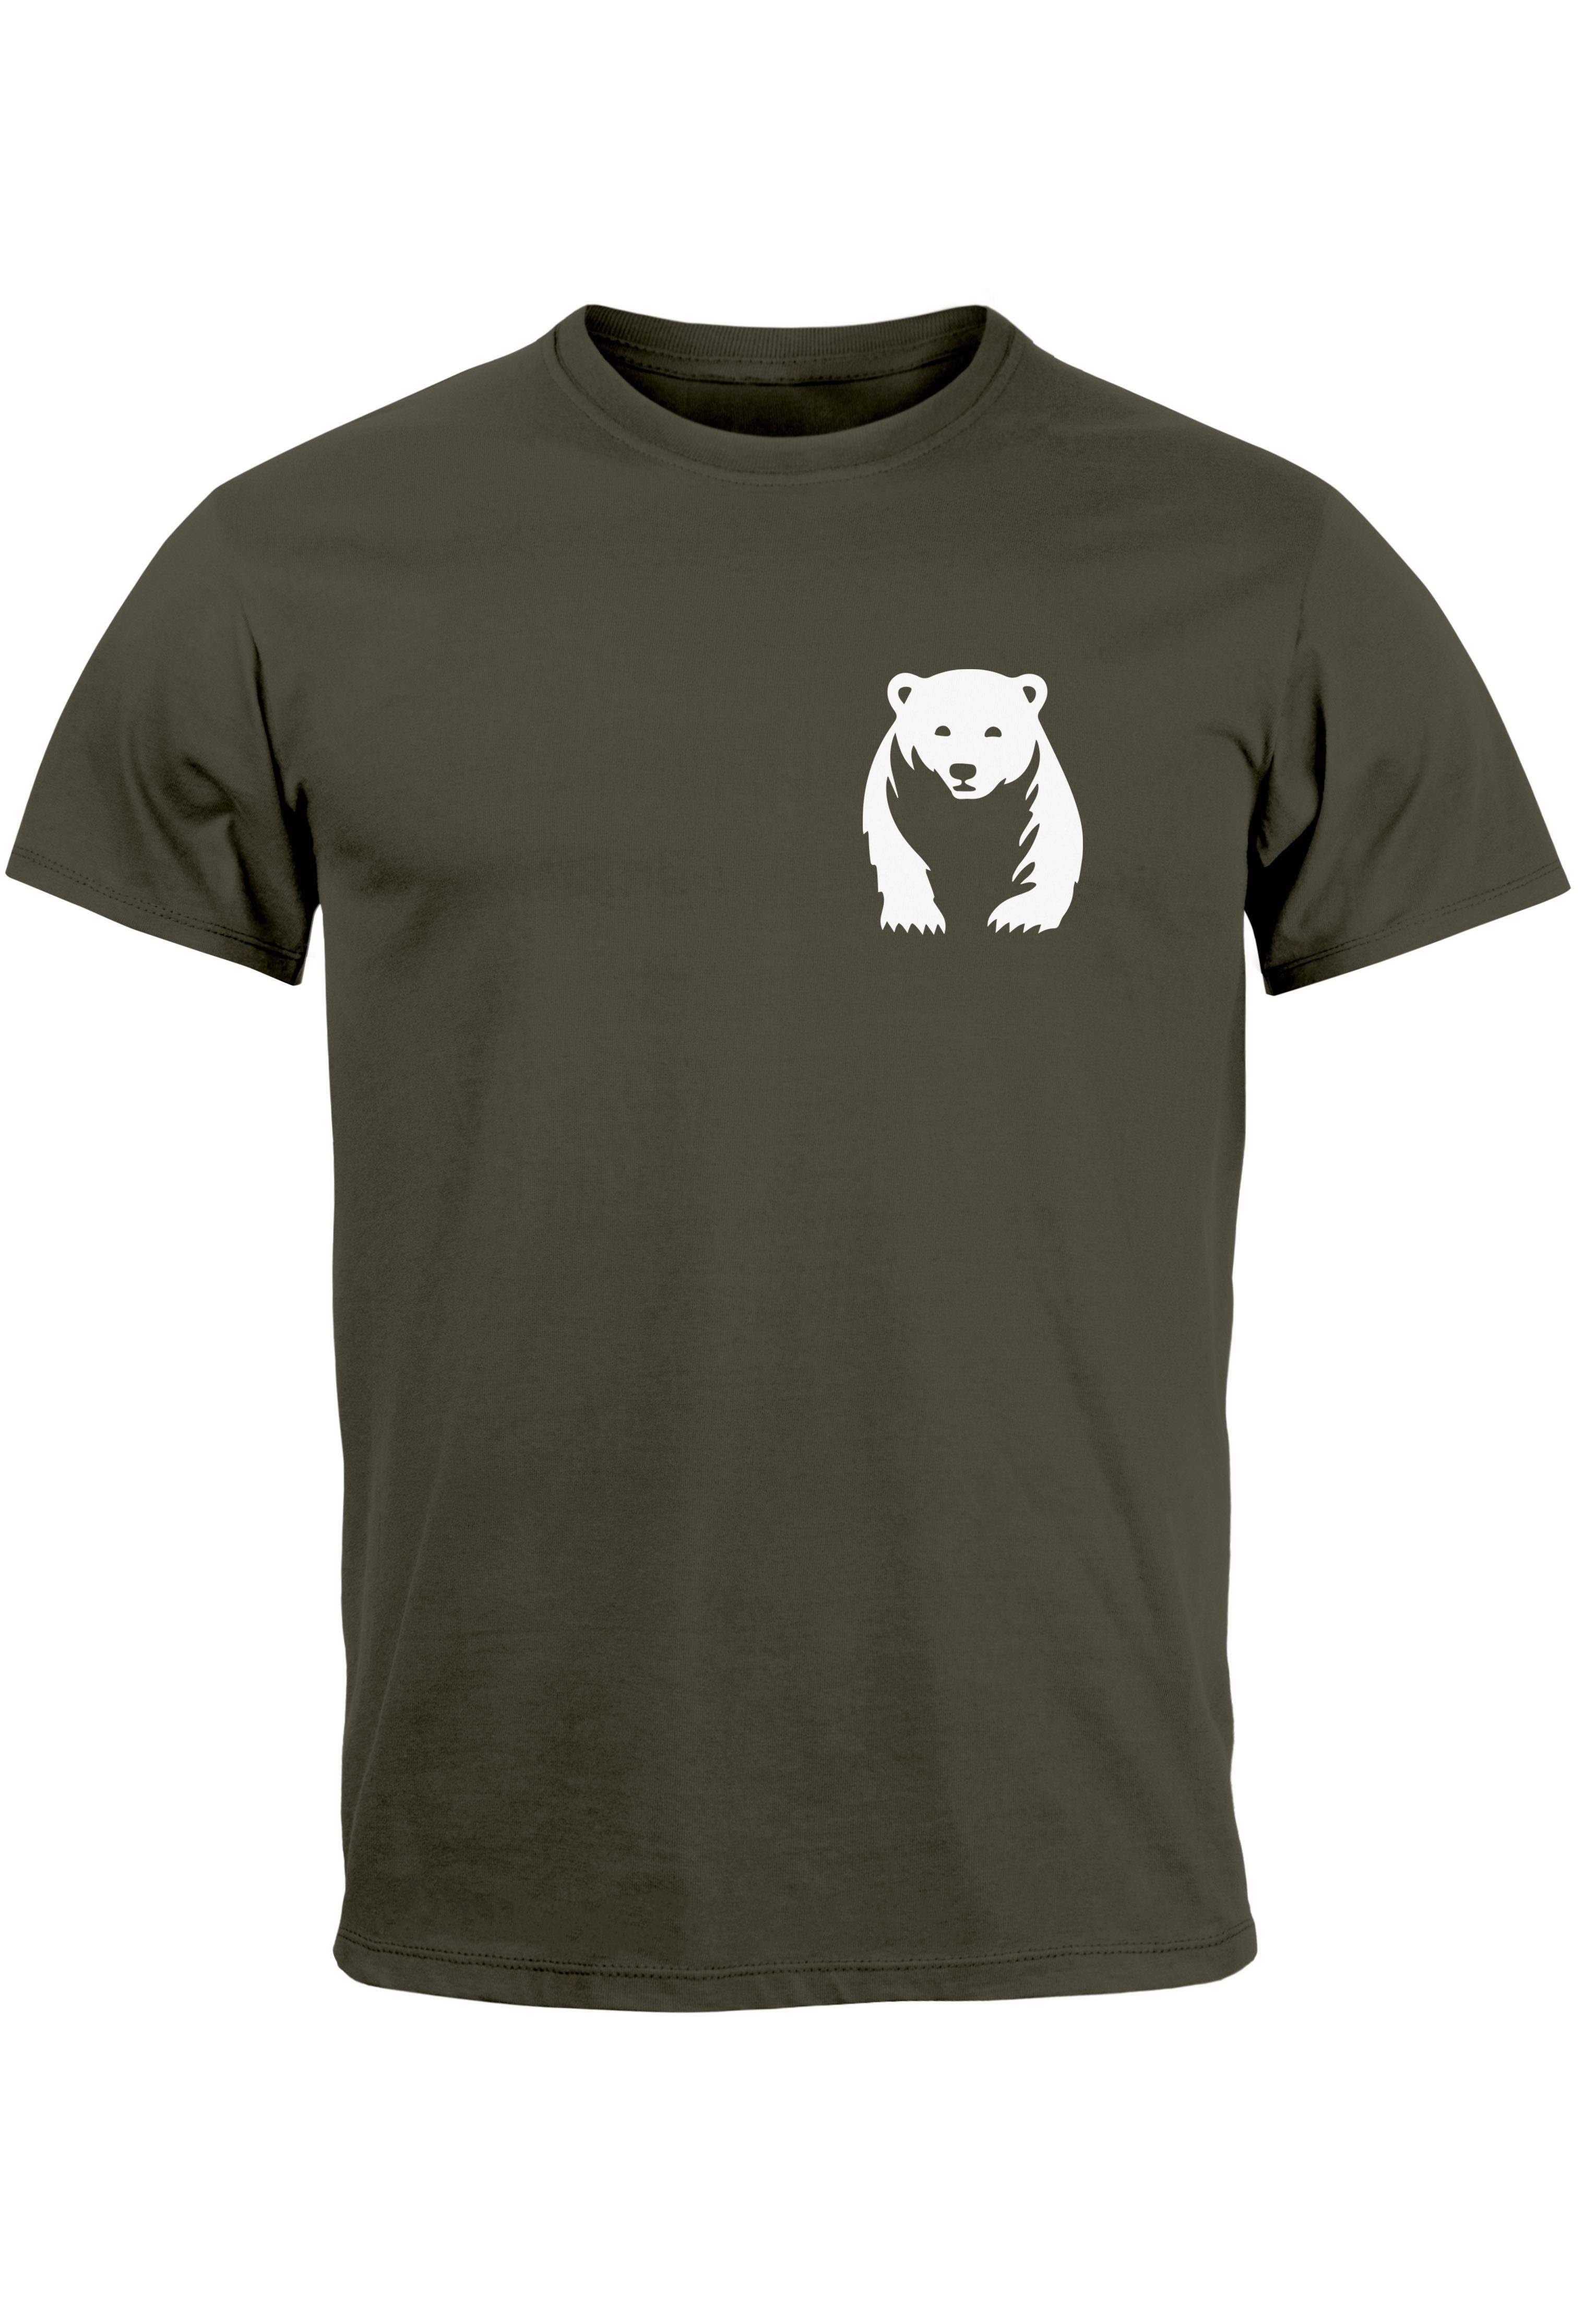 Neverless Print-Shirt Herren T-Shirt Aufdruck Brustprint Logo Bär Natur Outdoor Fashion Stre mit Print army